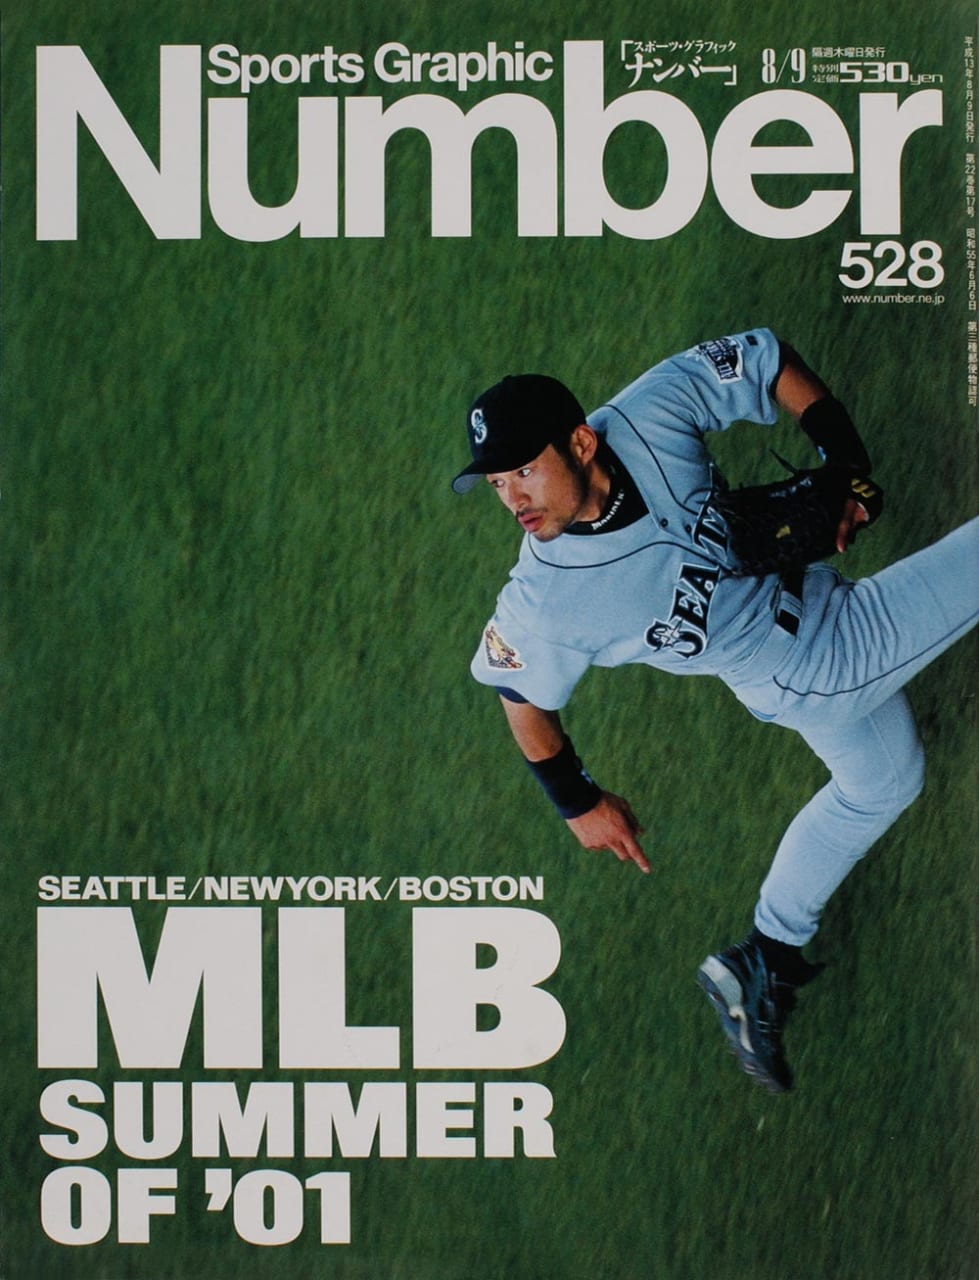 Sports Graphic Number 528号
2001年7月26日発売
表紙撮影：佐貫直哉